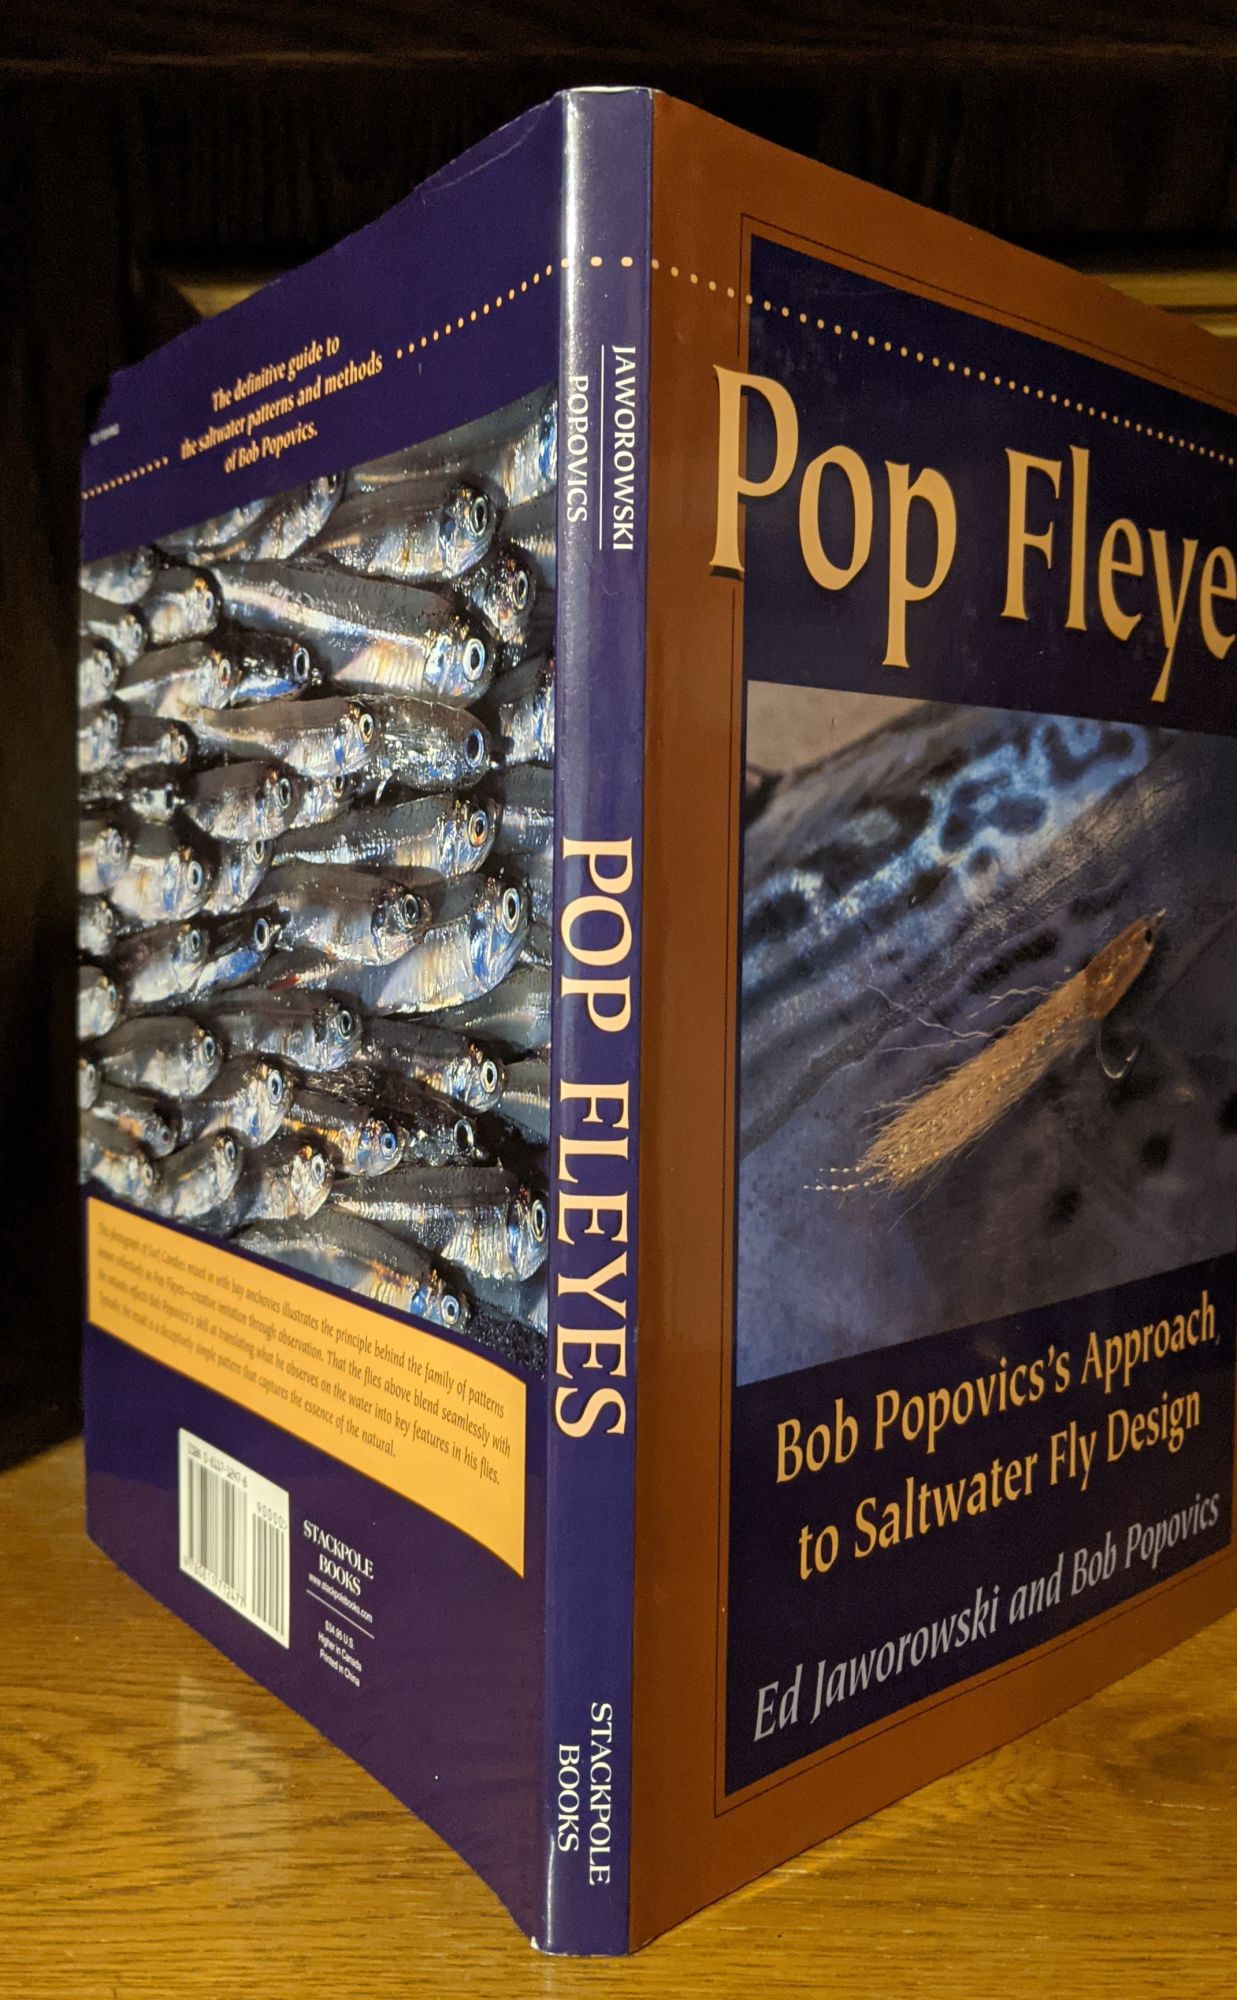 Pop Fleyes. Bob popovics's Approach to Saltwater Fly Design, Ed  Jaworowski, Bob Popovics